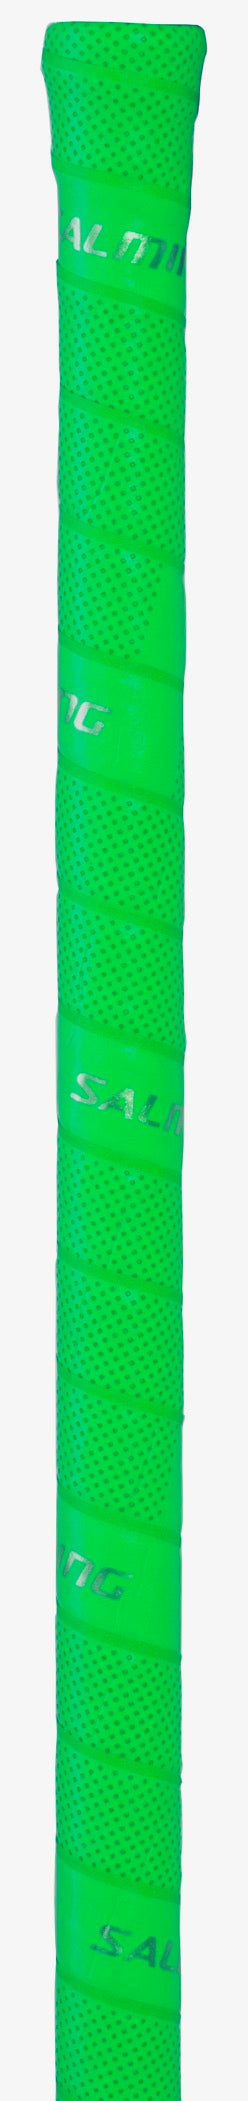 Salming Ultimate Replacement Floorball Grip - Green